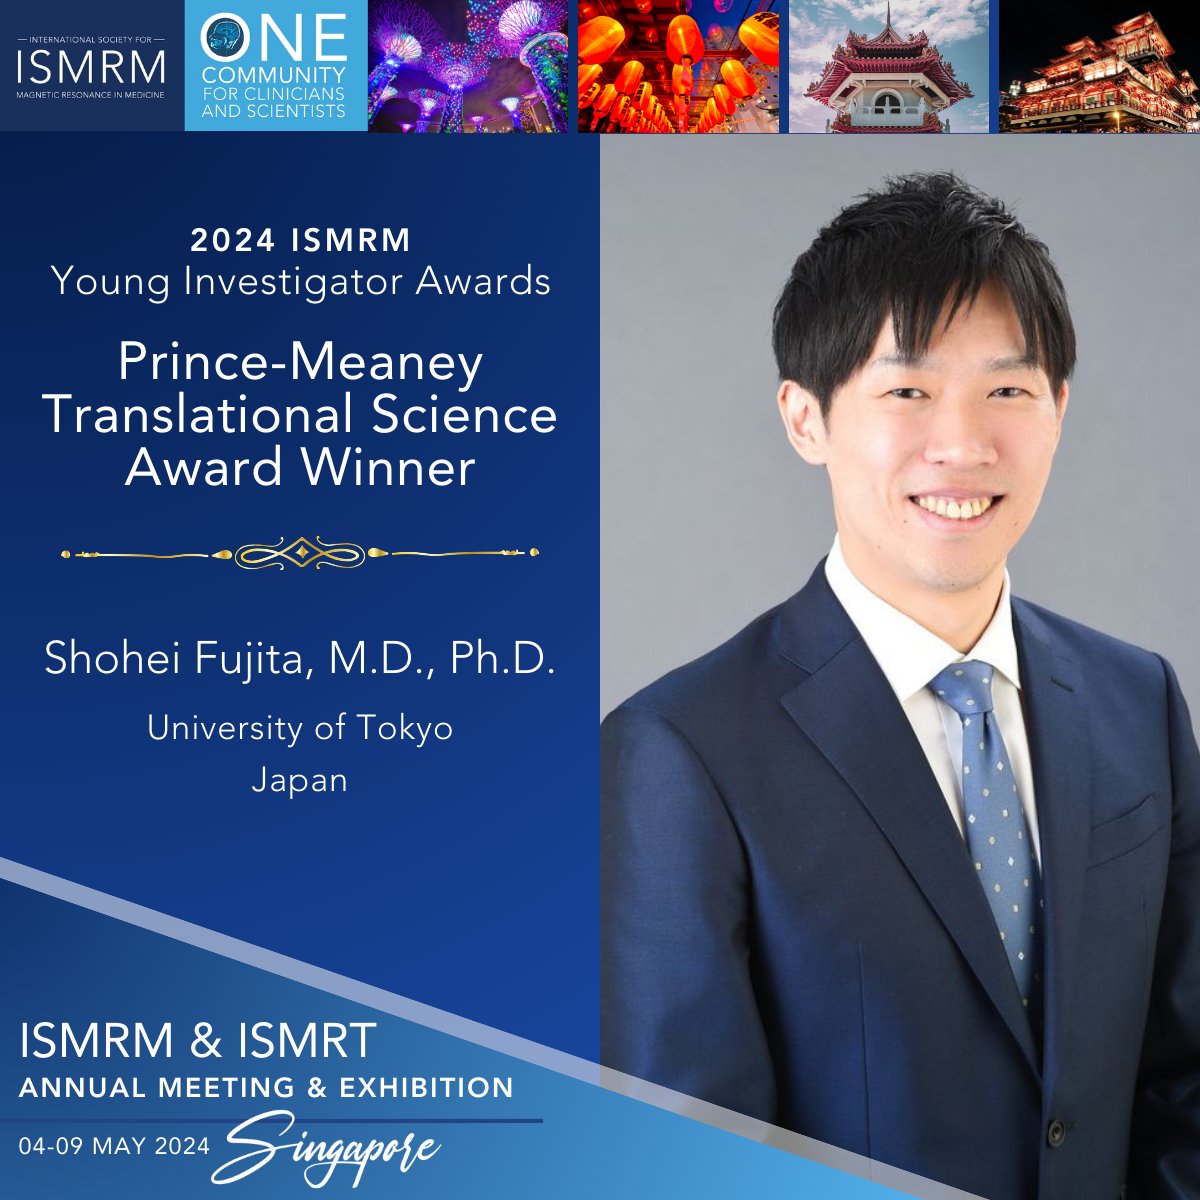 Congratulations to the 2024 Prince-Meaney Translational Science Award Winner, Shohei Fujita from the University of Tokyo! 2024 ISMRM Young Investigator Awards: ow.ly/XQhn50RA0Pa #ISMRM2024 #ISMRT2024 #ISMRM #ISMRT #MRI #MR #MagneticResonance #Singapore #UniversityofTokyo